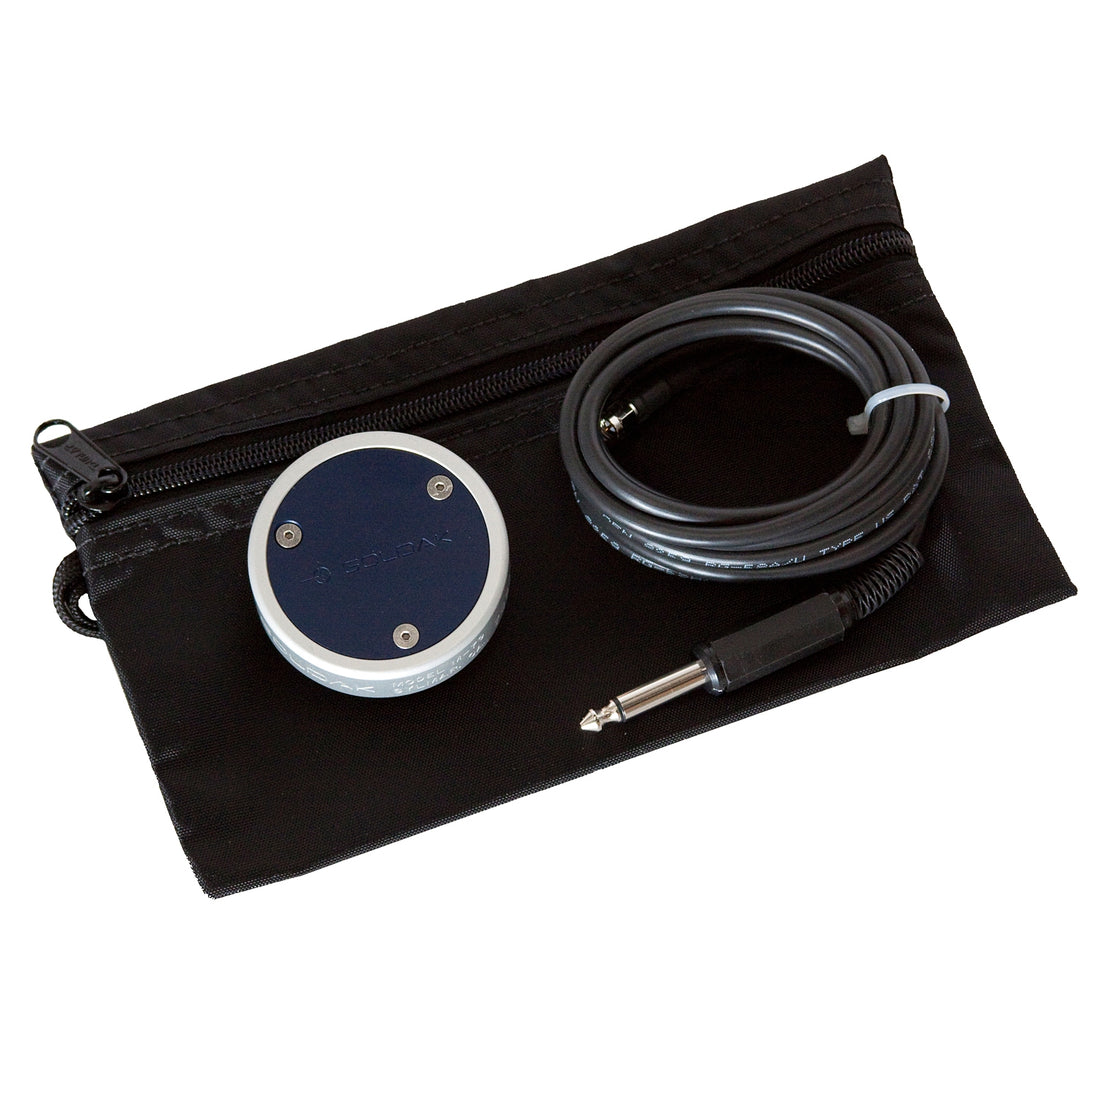 Goldak 777-B Leak Detector with M-79 Disc-Shaped Microphone + 12" Microphone Probe + NE-77 Noise Eliminator Microphone + Headphones + Large Hard Case